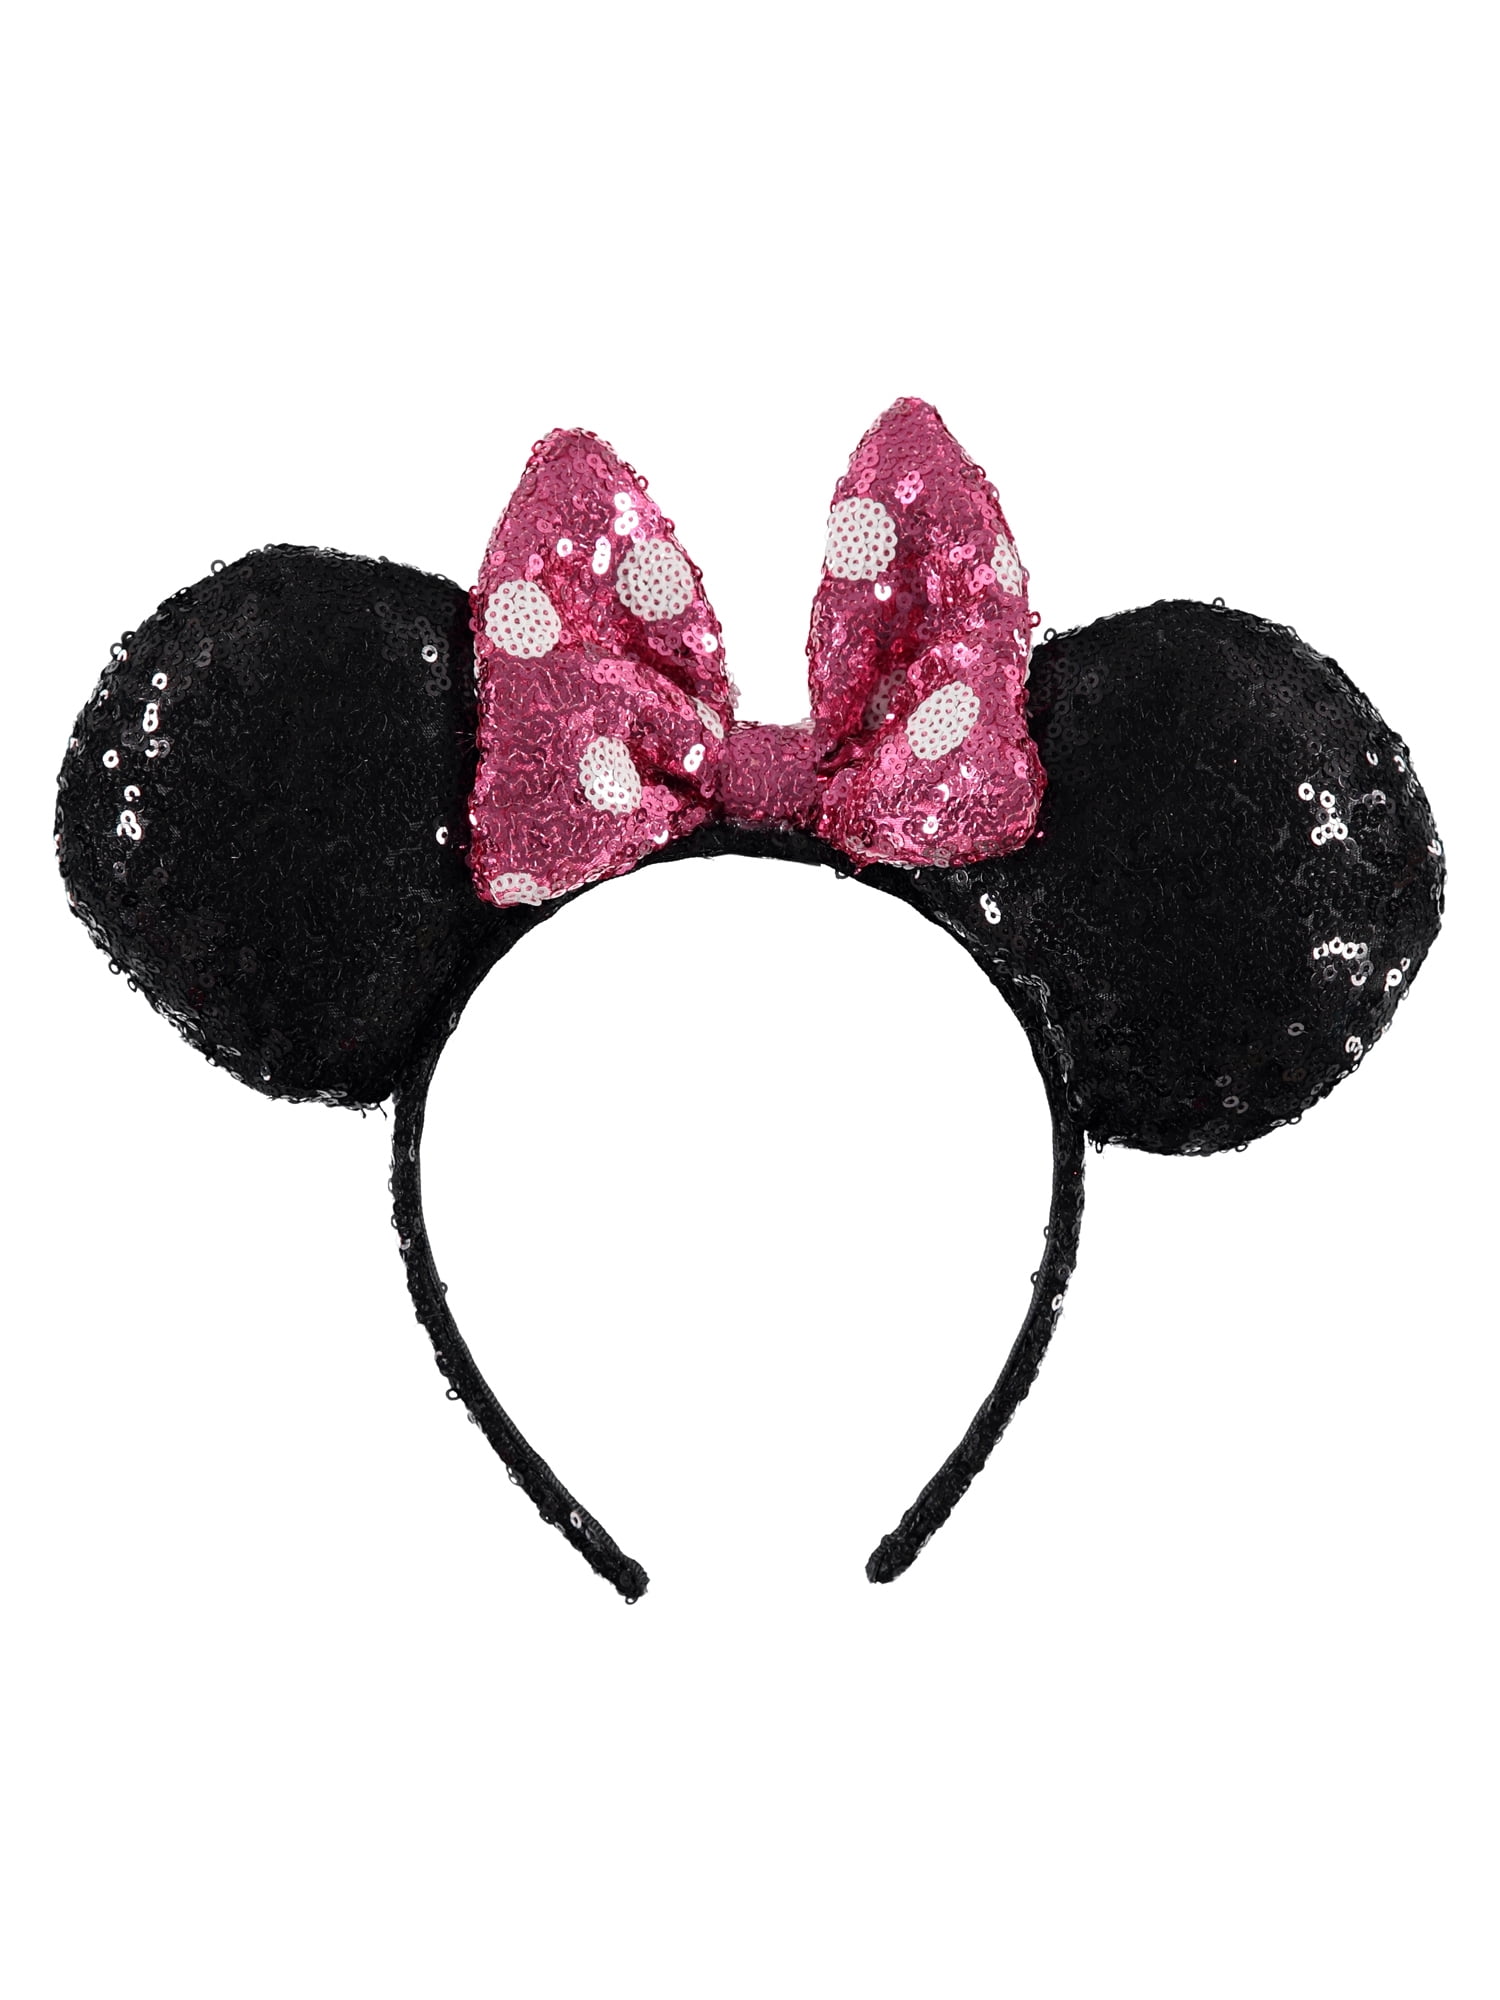 Minnie Mouse Ears Headbands 40 pc Black Pink Polka Dot Bow Mickey Birthday Party 